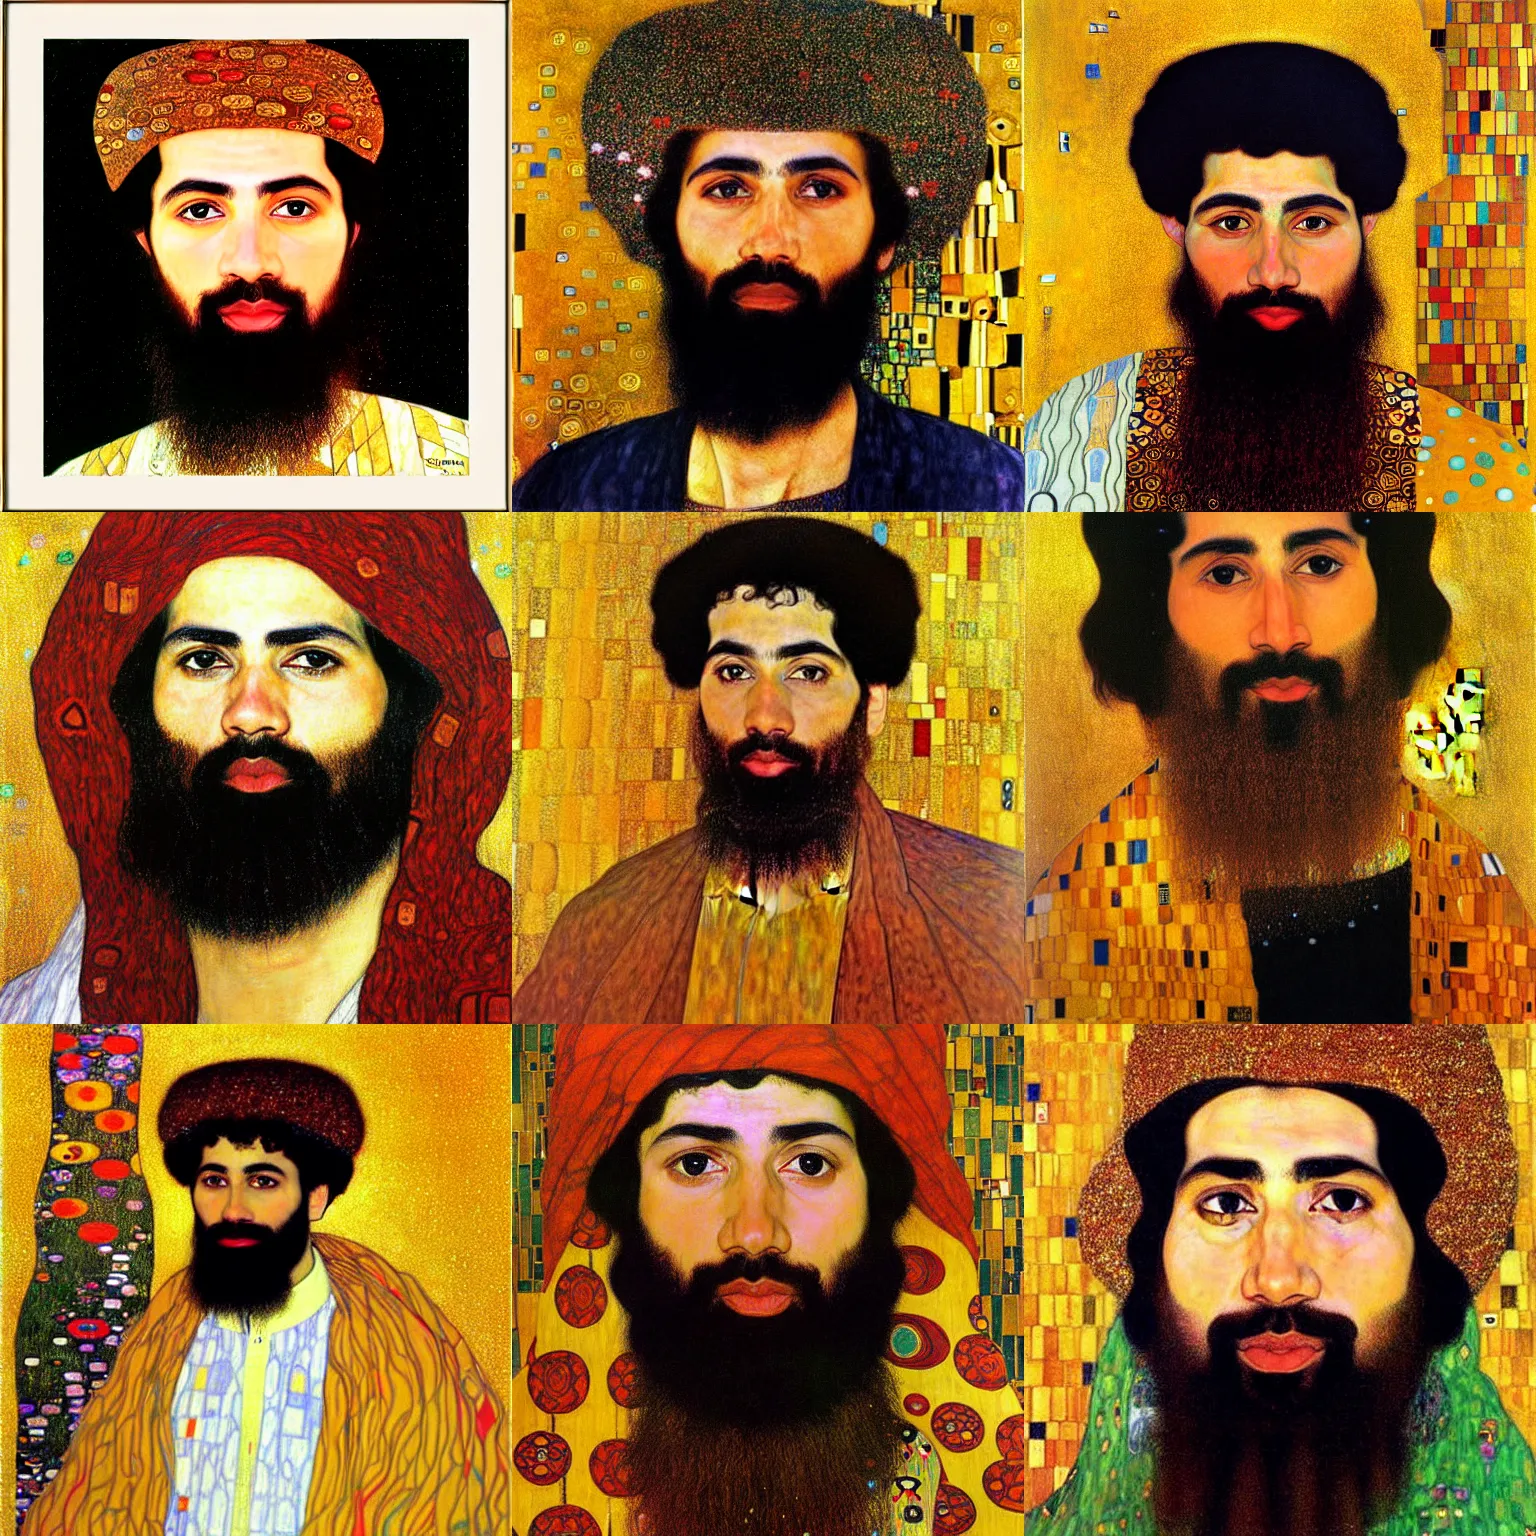 Prompt: beautiful portrait painting of prophet muhammad by gustav klimt